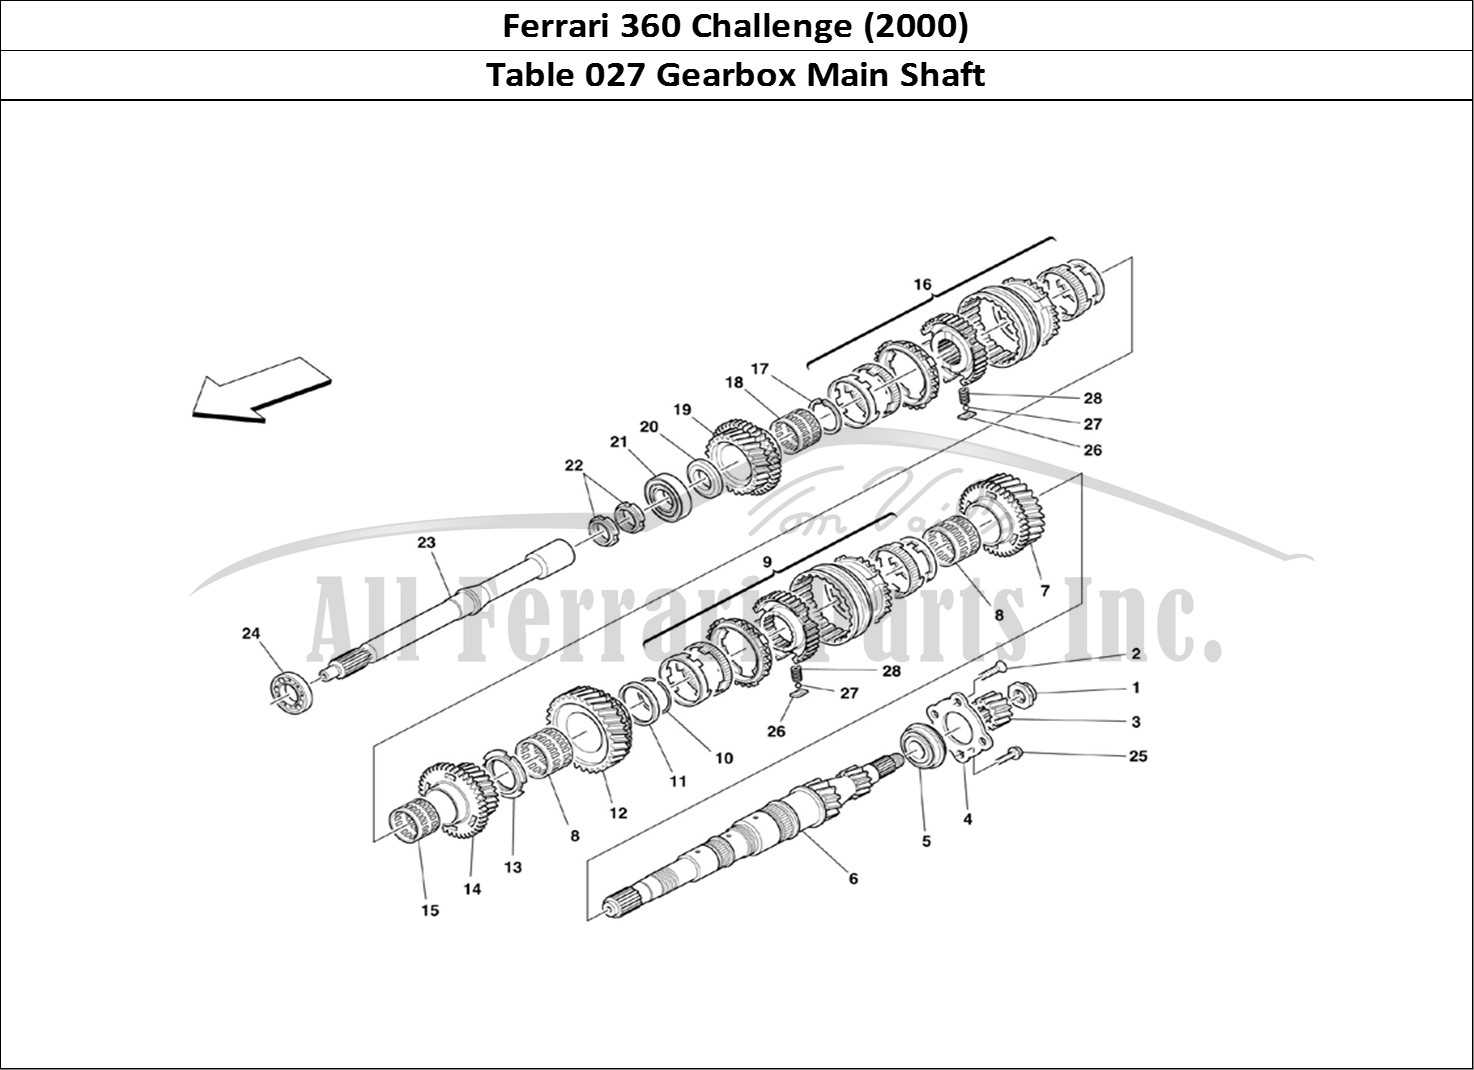 Ferrari Parts Ferrari 360 Challenge (2000) Page 027 Main Shaft Gears